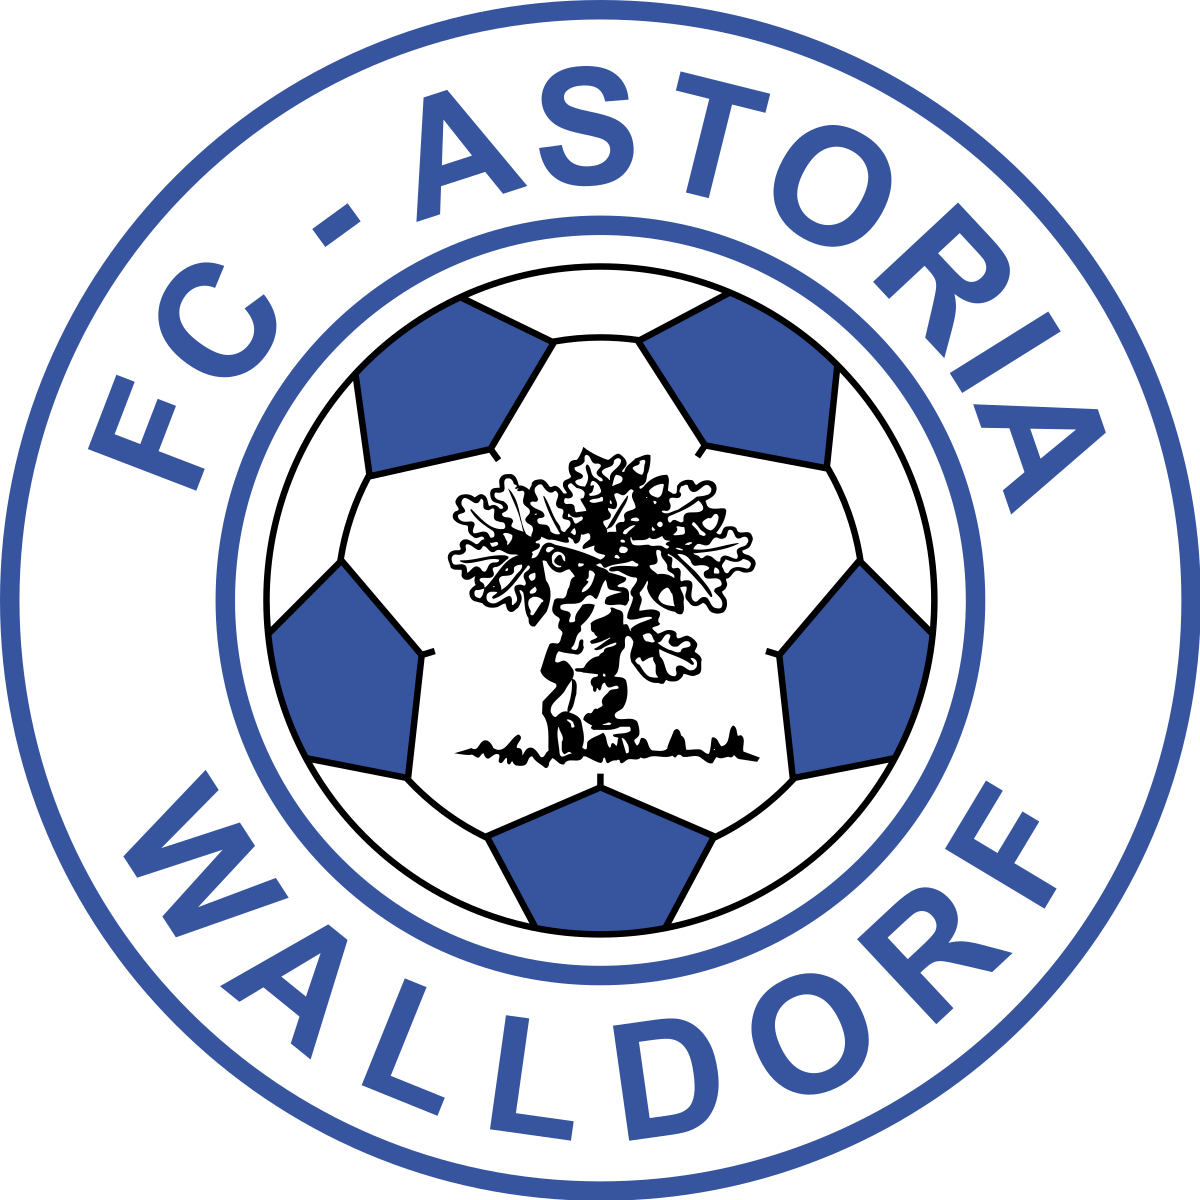 Astoria Walldorf U-19 logo